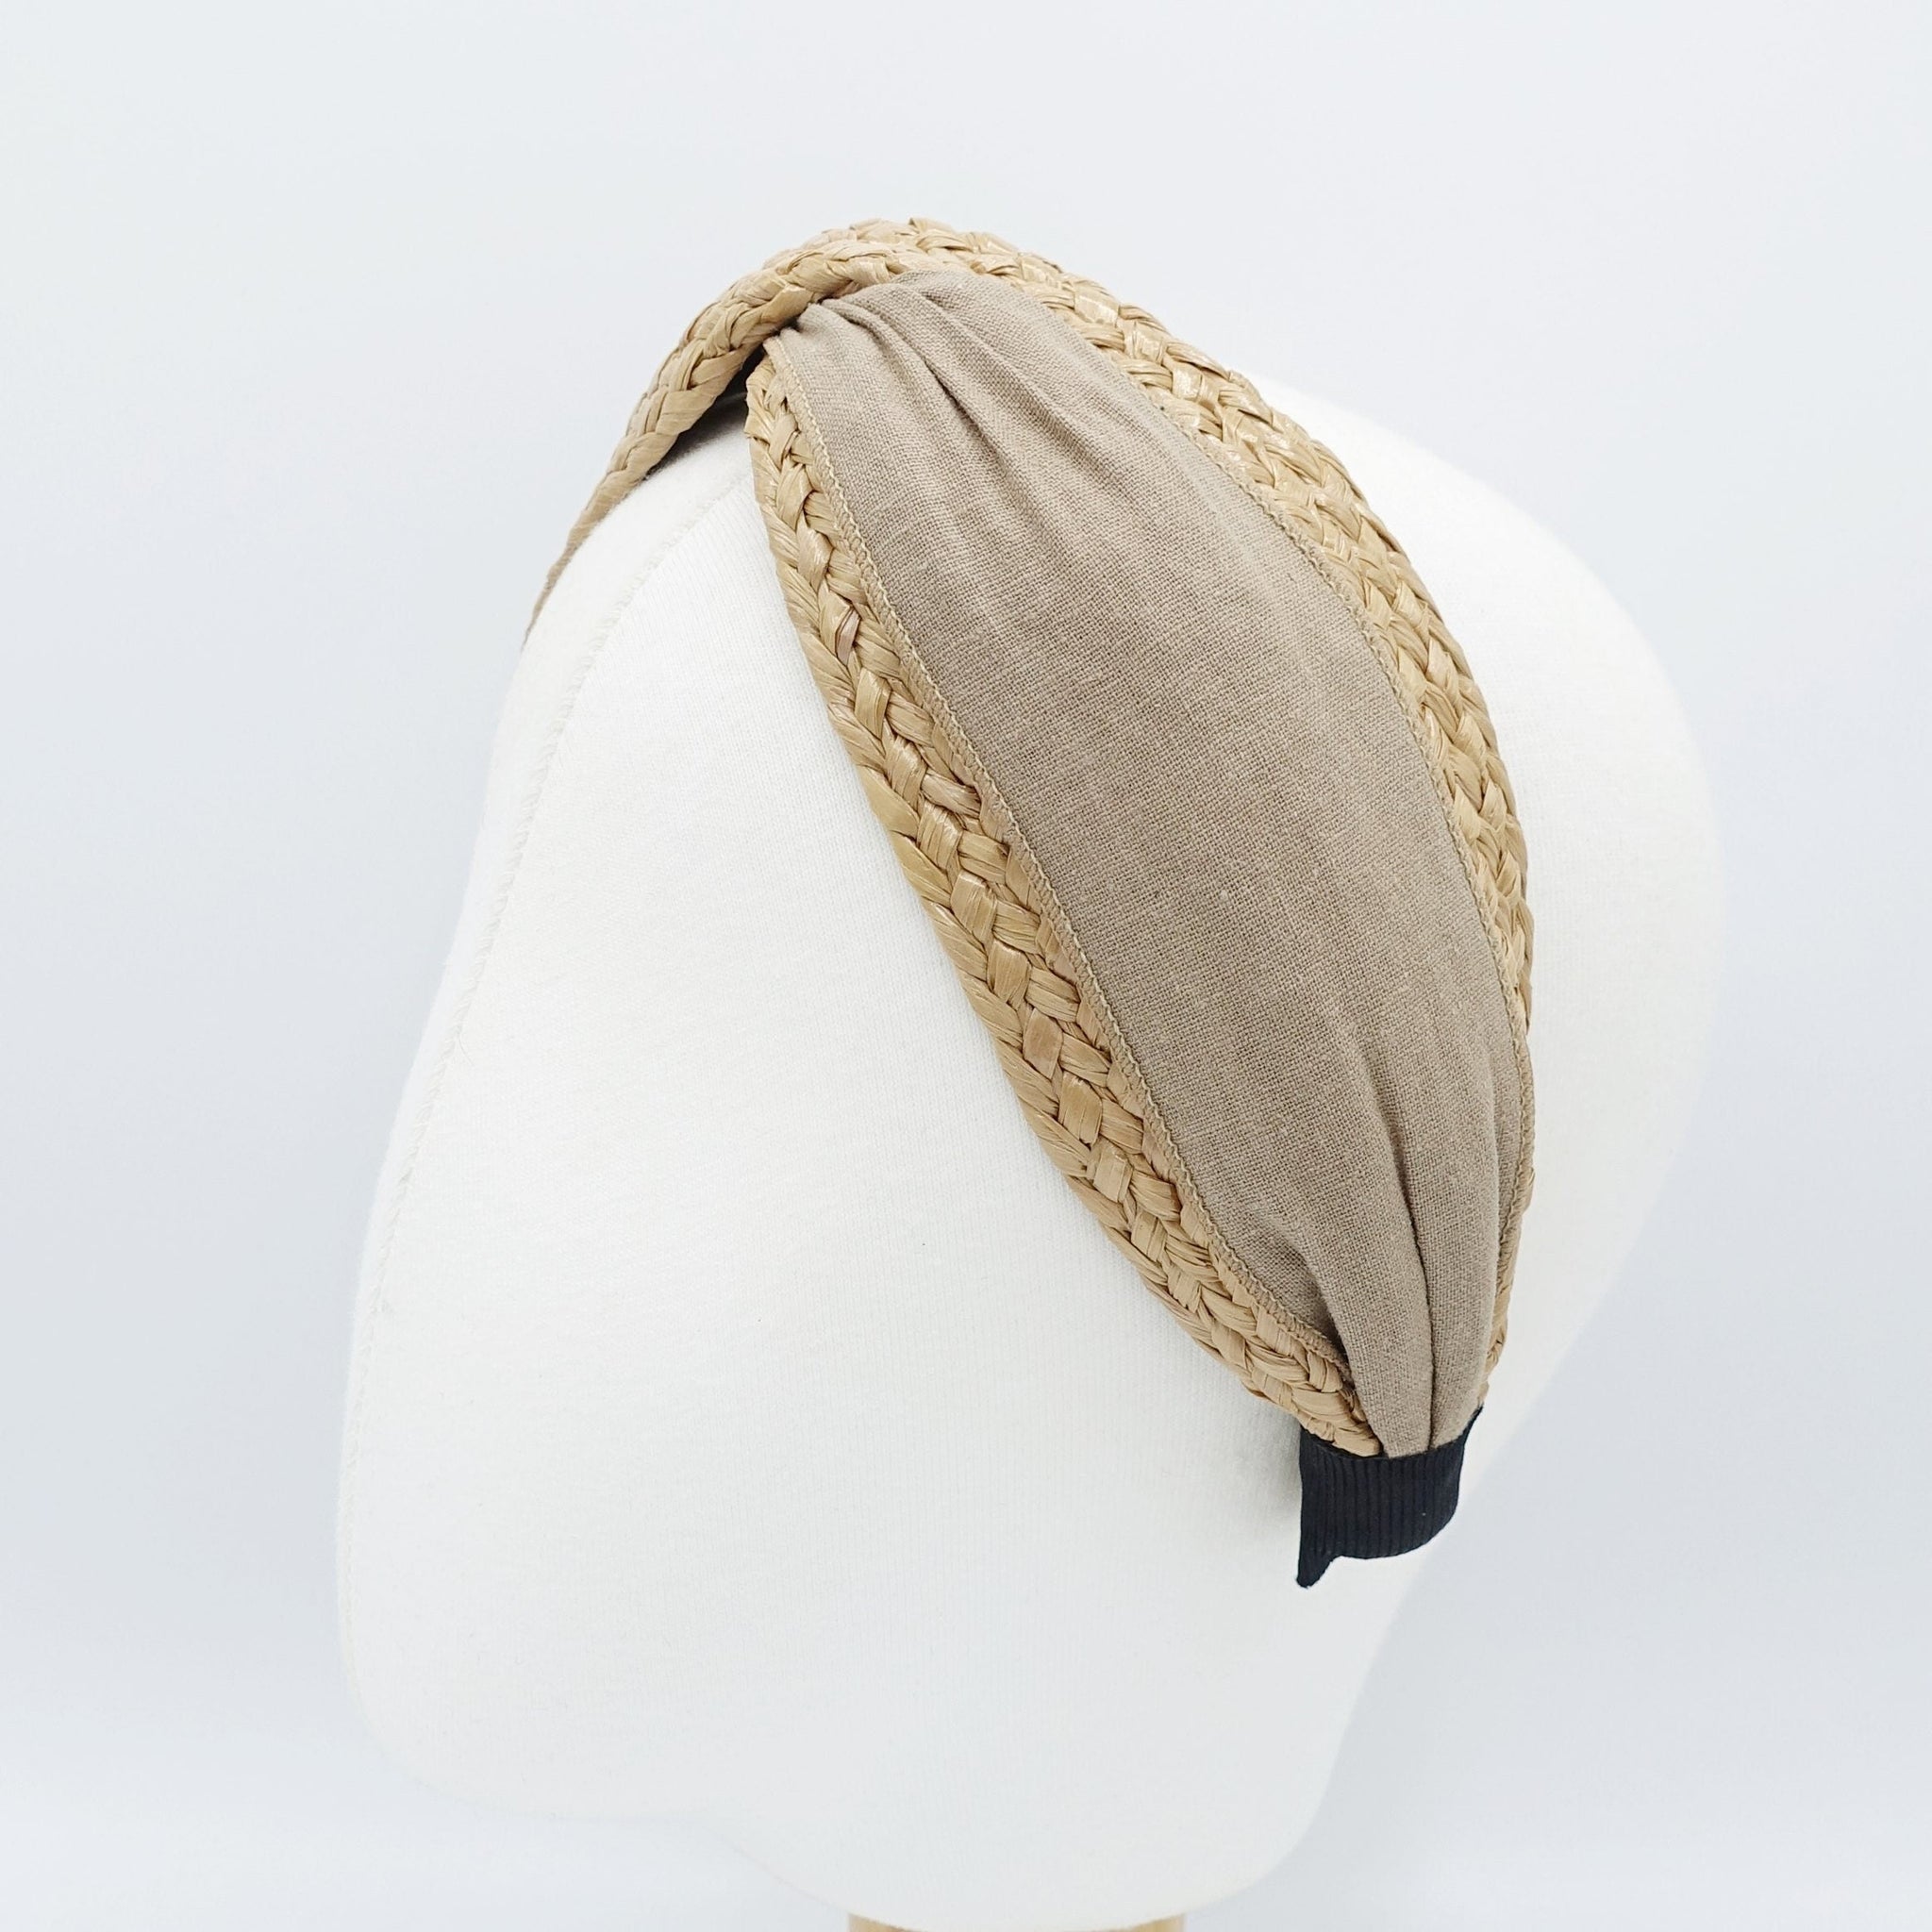 veryshine.com Headband rattan cross headband fabric layered straw hairband Summer holiday hair accessory for women